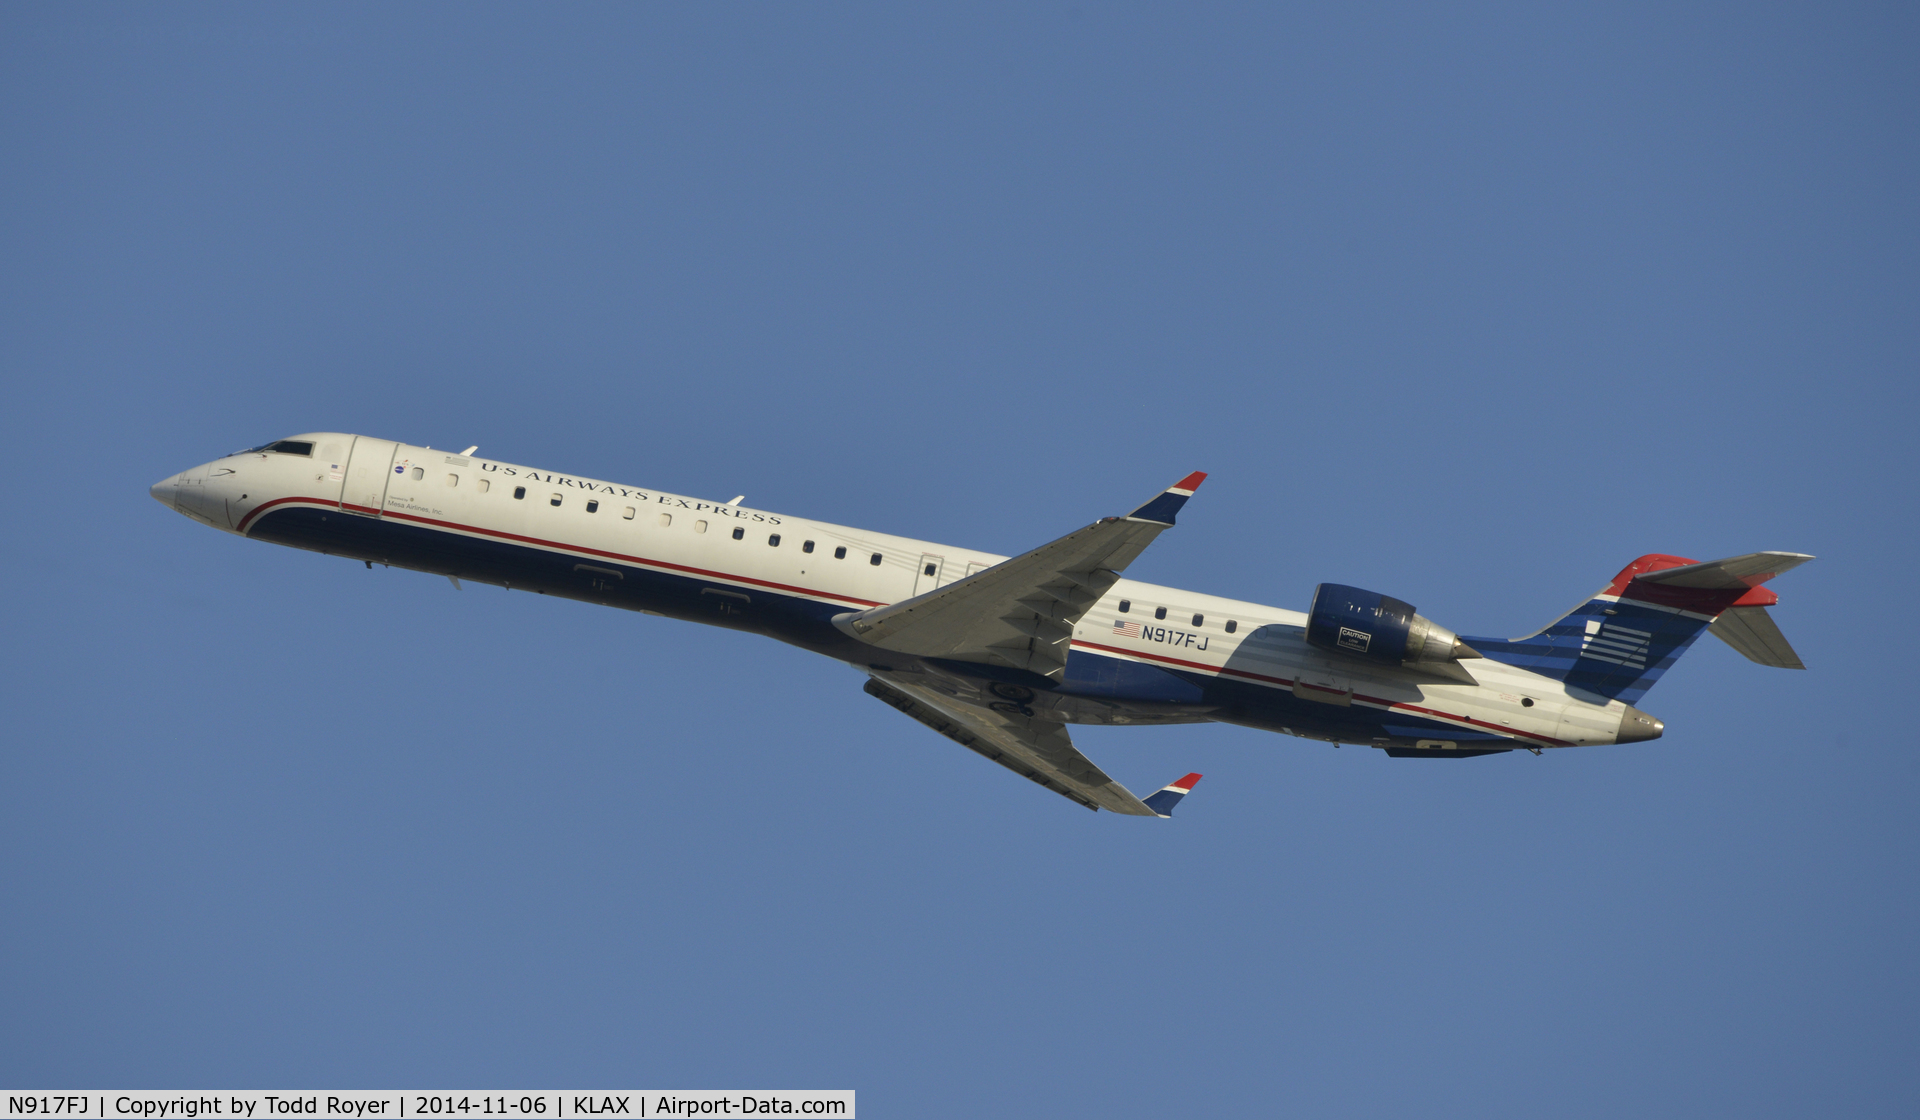 N917FJ, 2004 Bombardier CRJ-900ER (CL-600-2D24) C/N 15017, Departing LAX on 25R